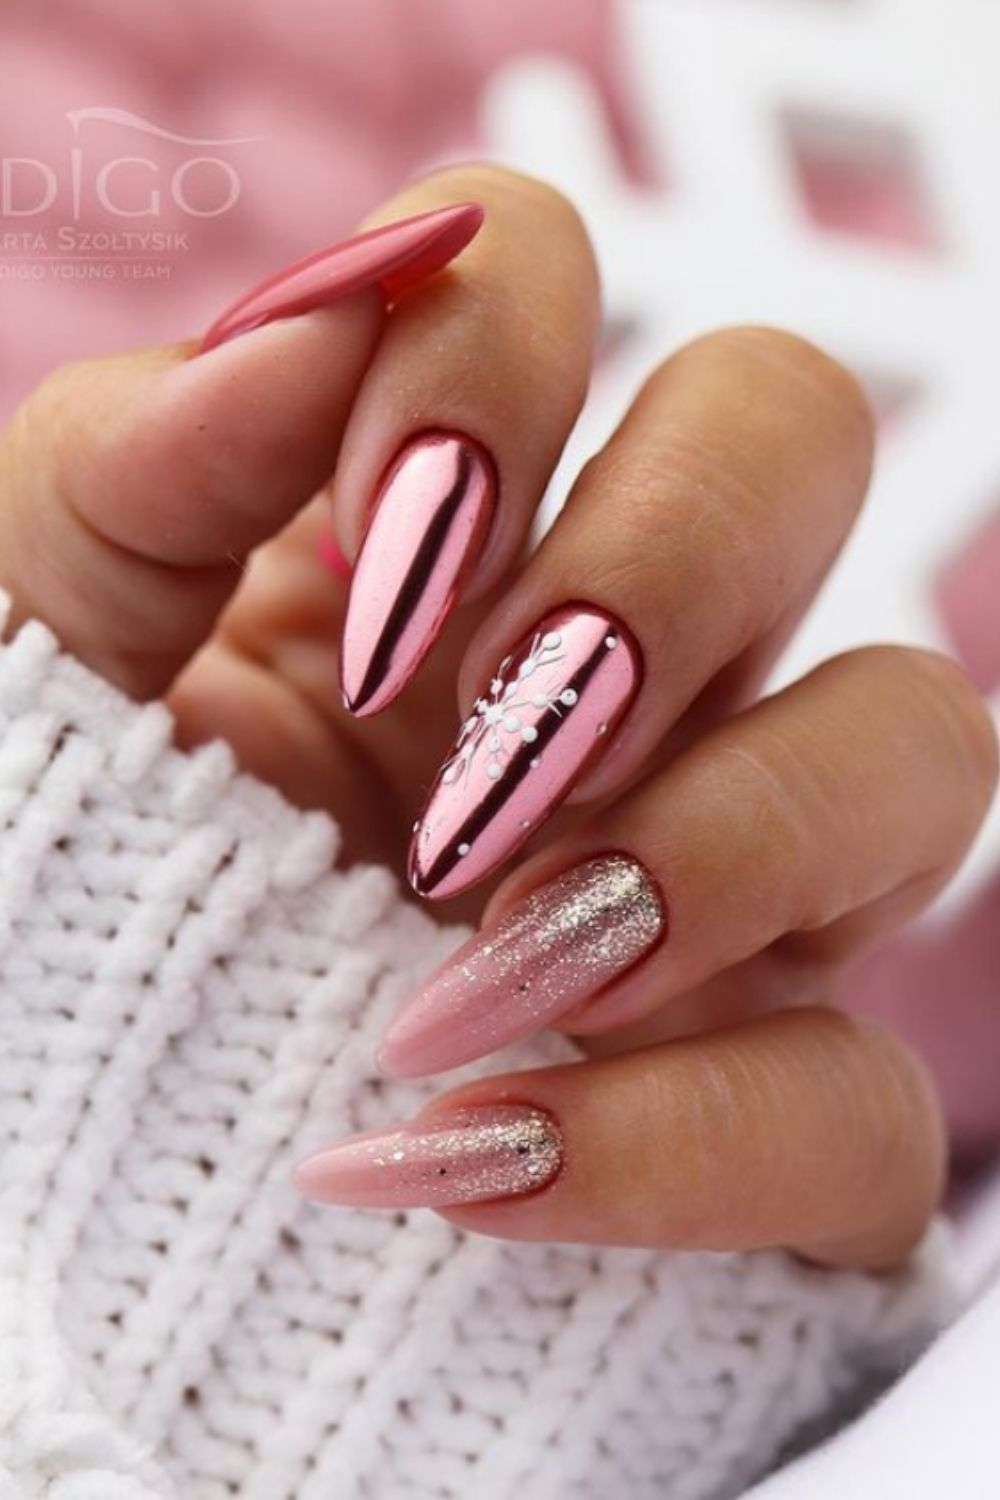 Glitter pink almond nails